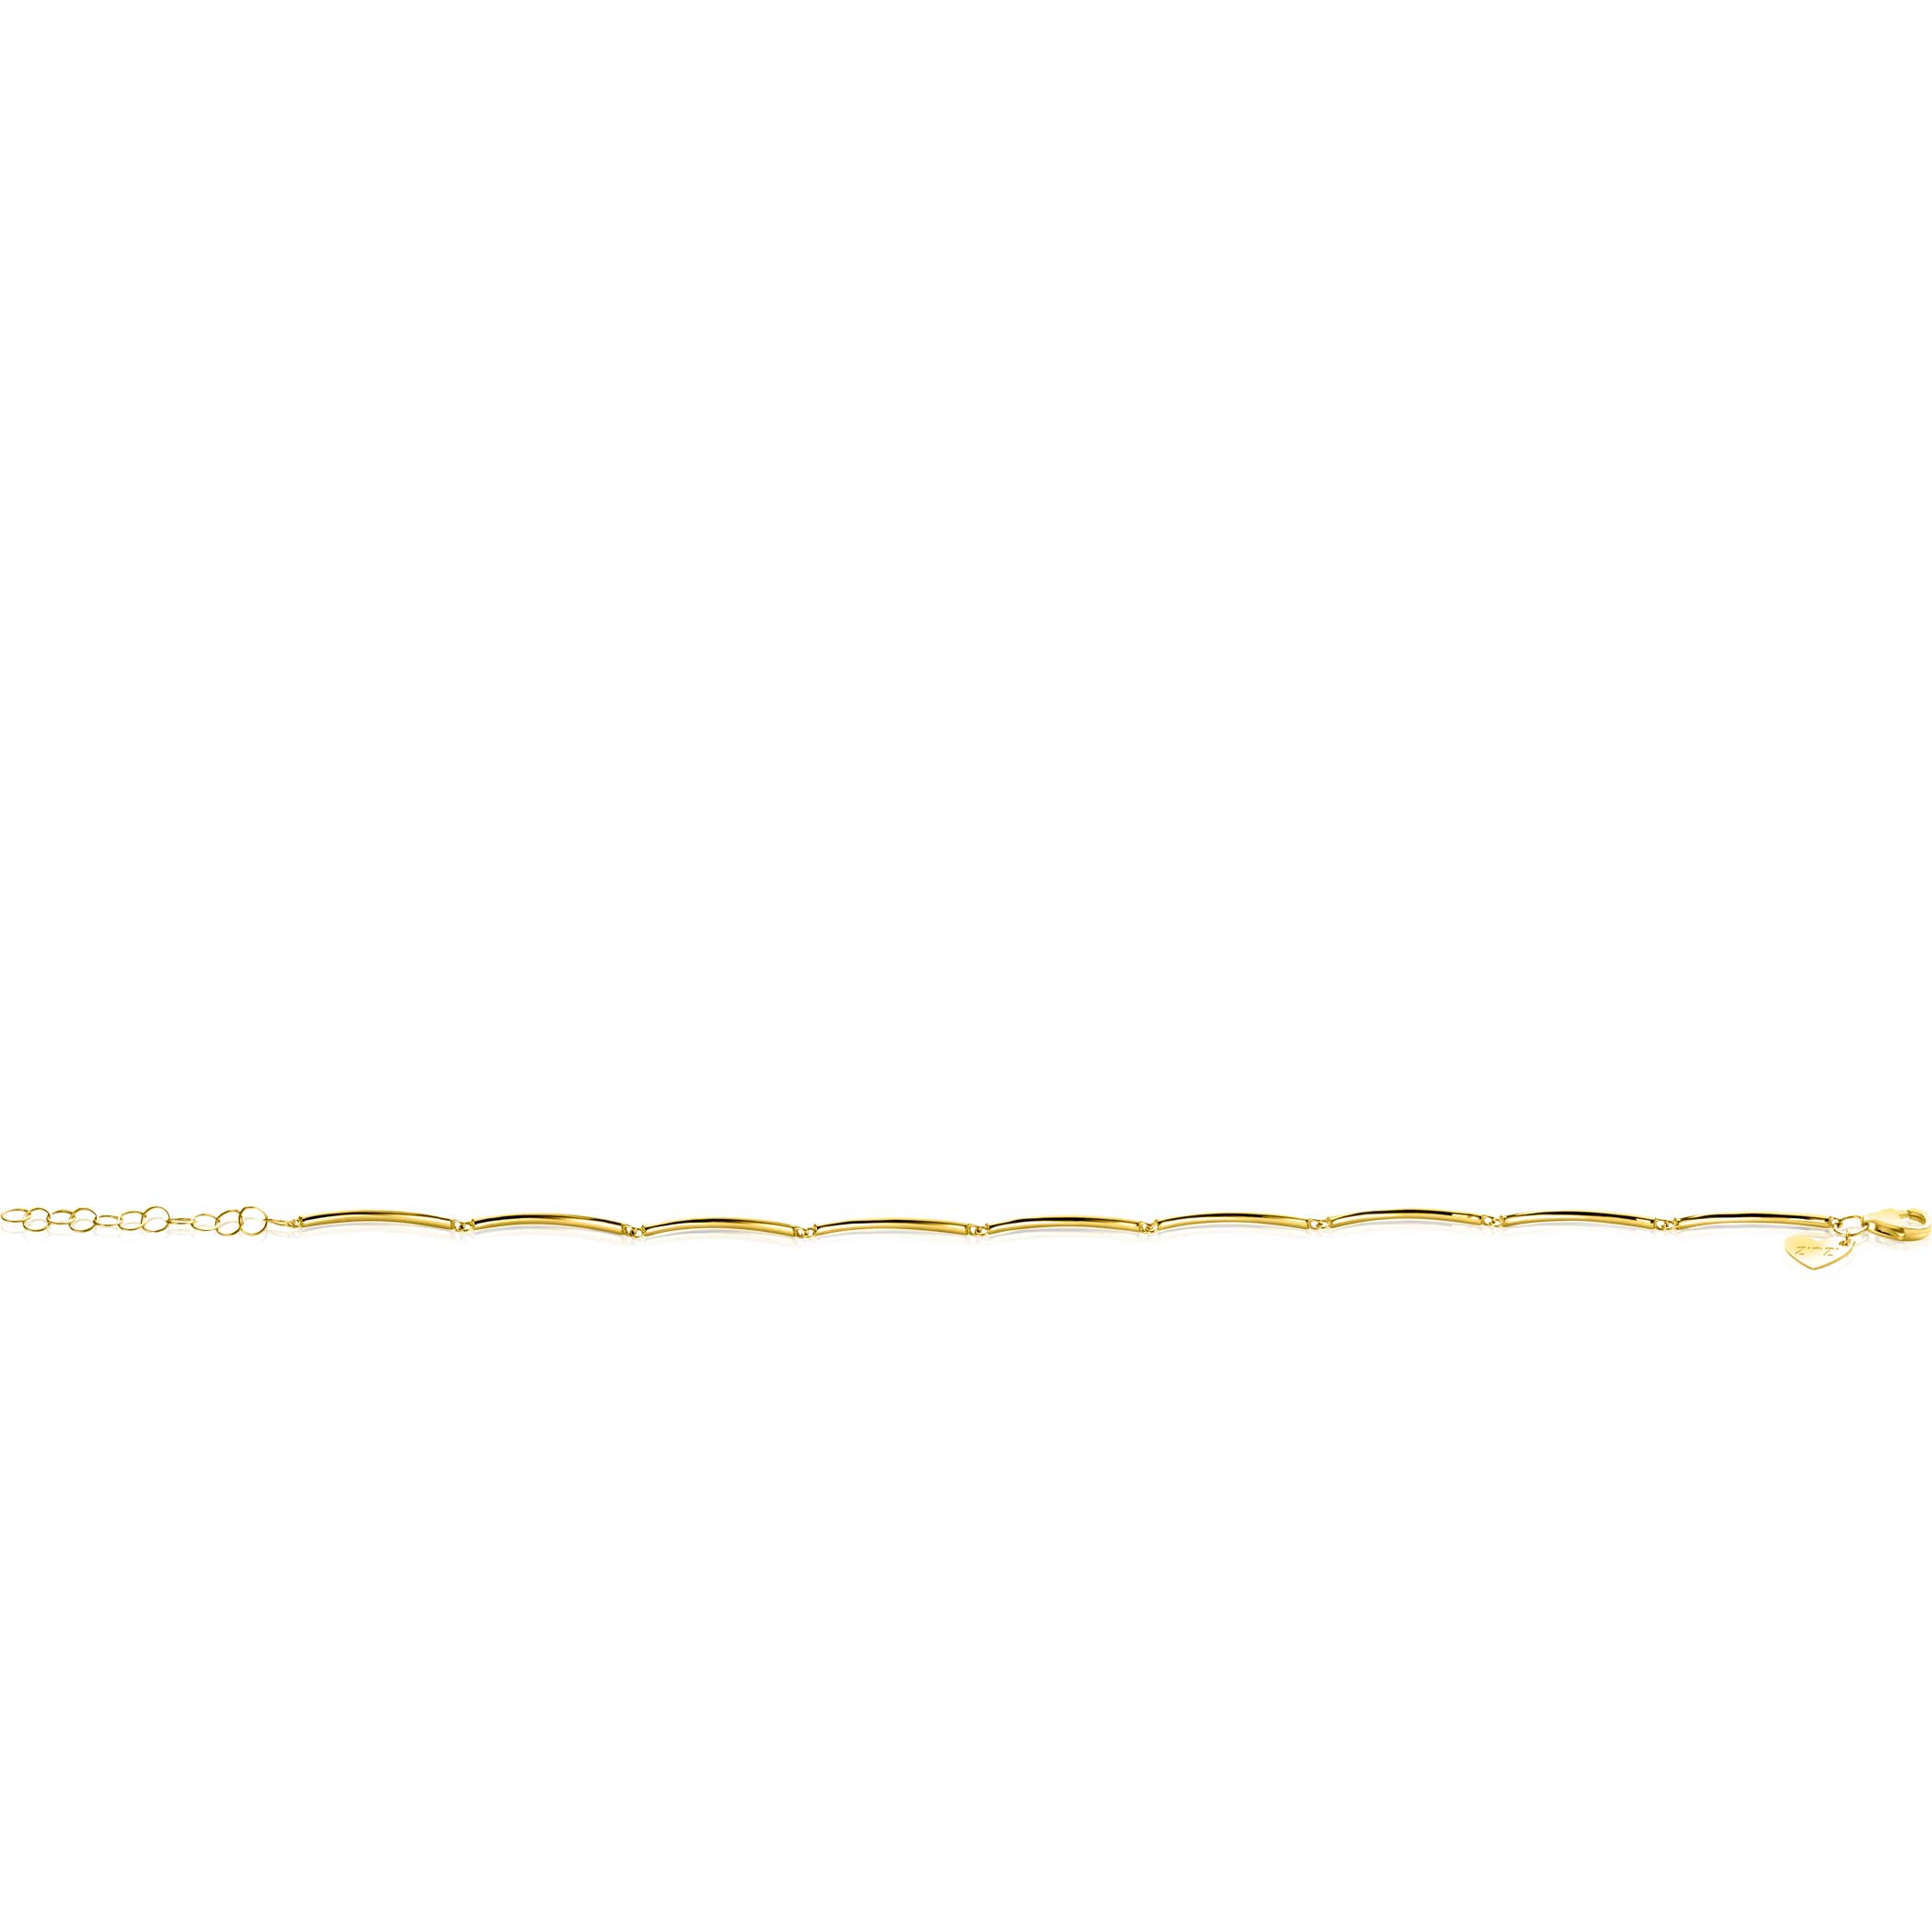 ZINZI 14K Gold Bracelet Rectangular Bars Square Tube 1,6mm width 16,5-19cm ZGA461